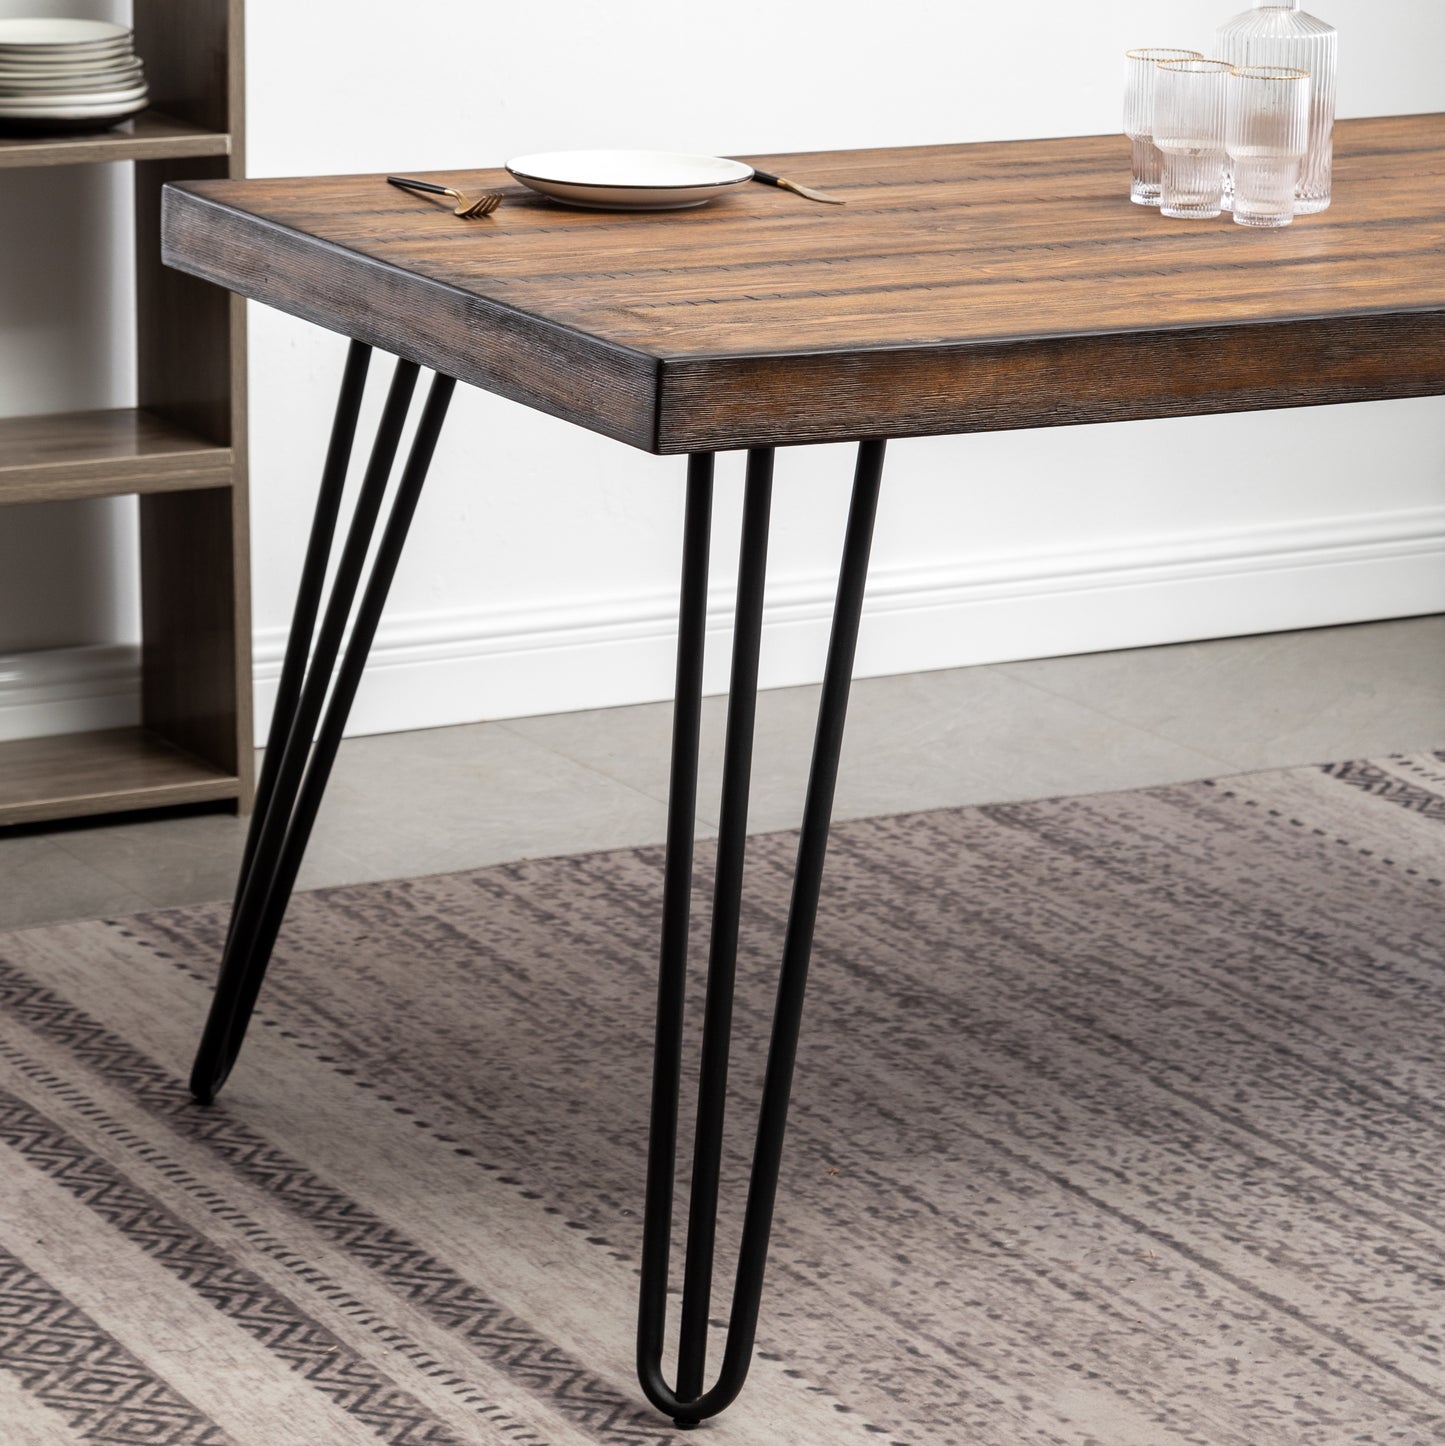 Aryven Industrial Metal Hairpin Design Dining Table, Rustic Dark Pine